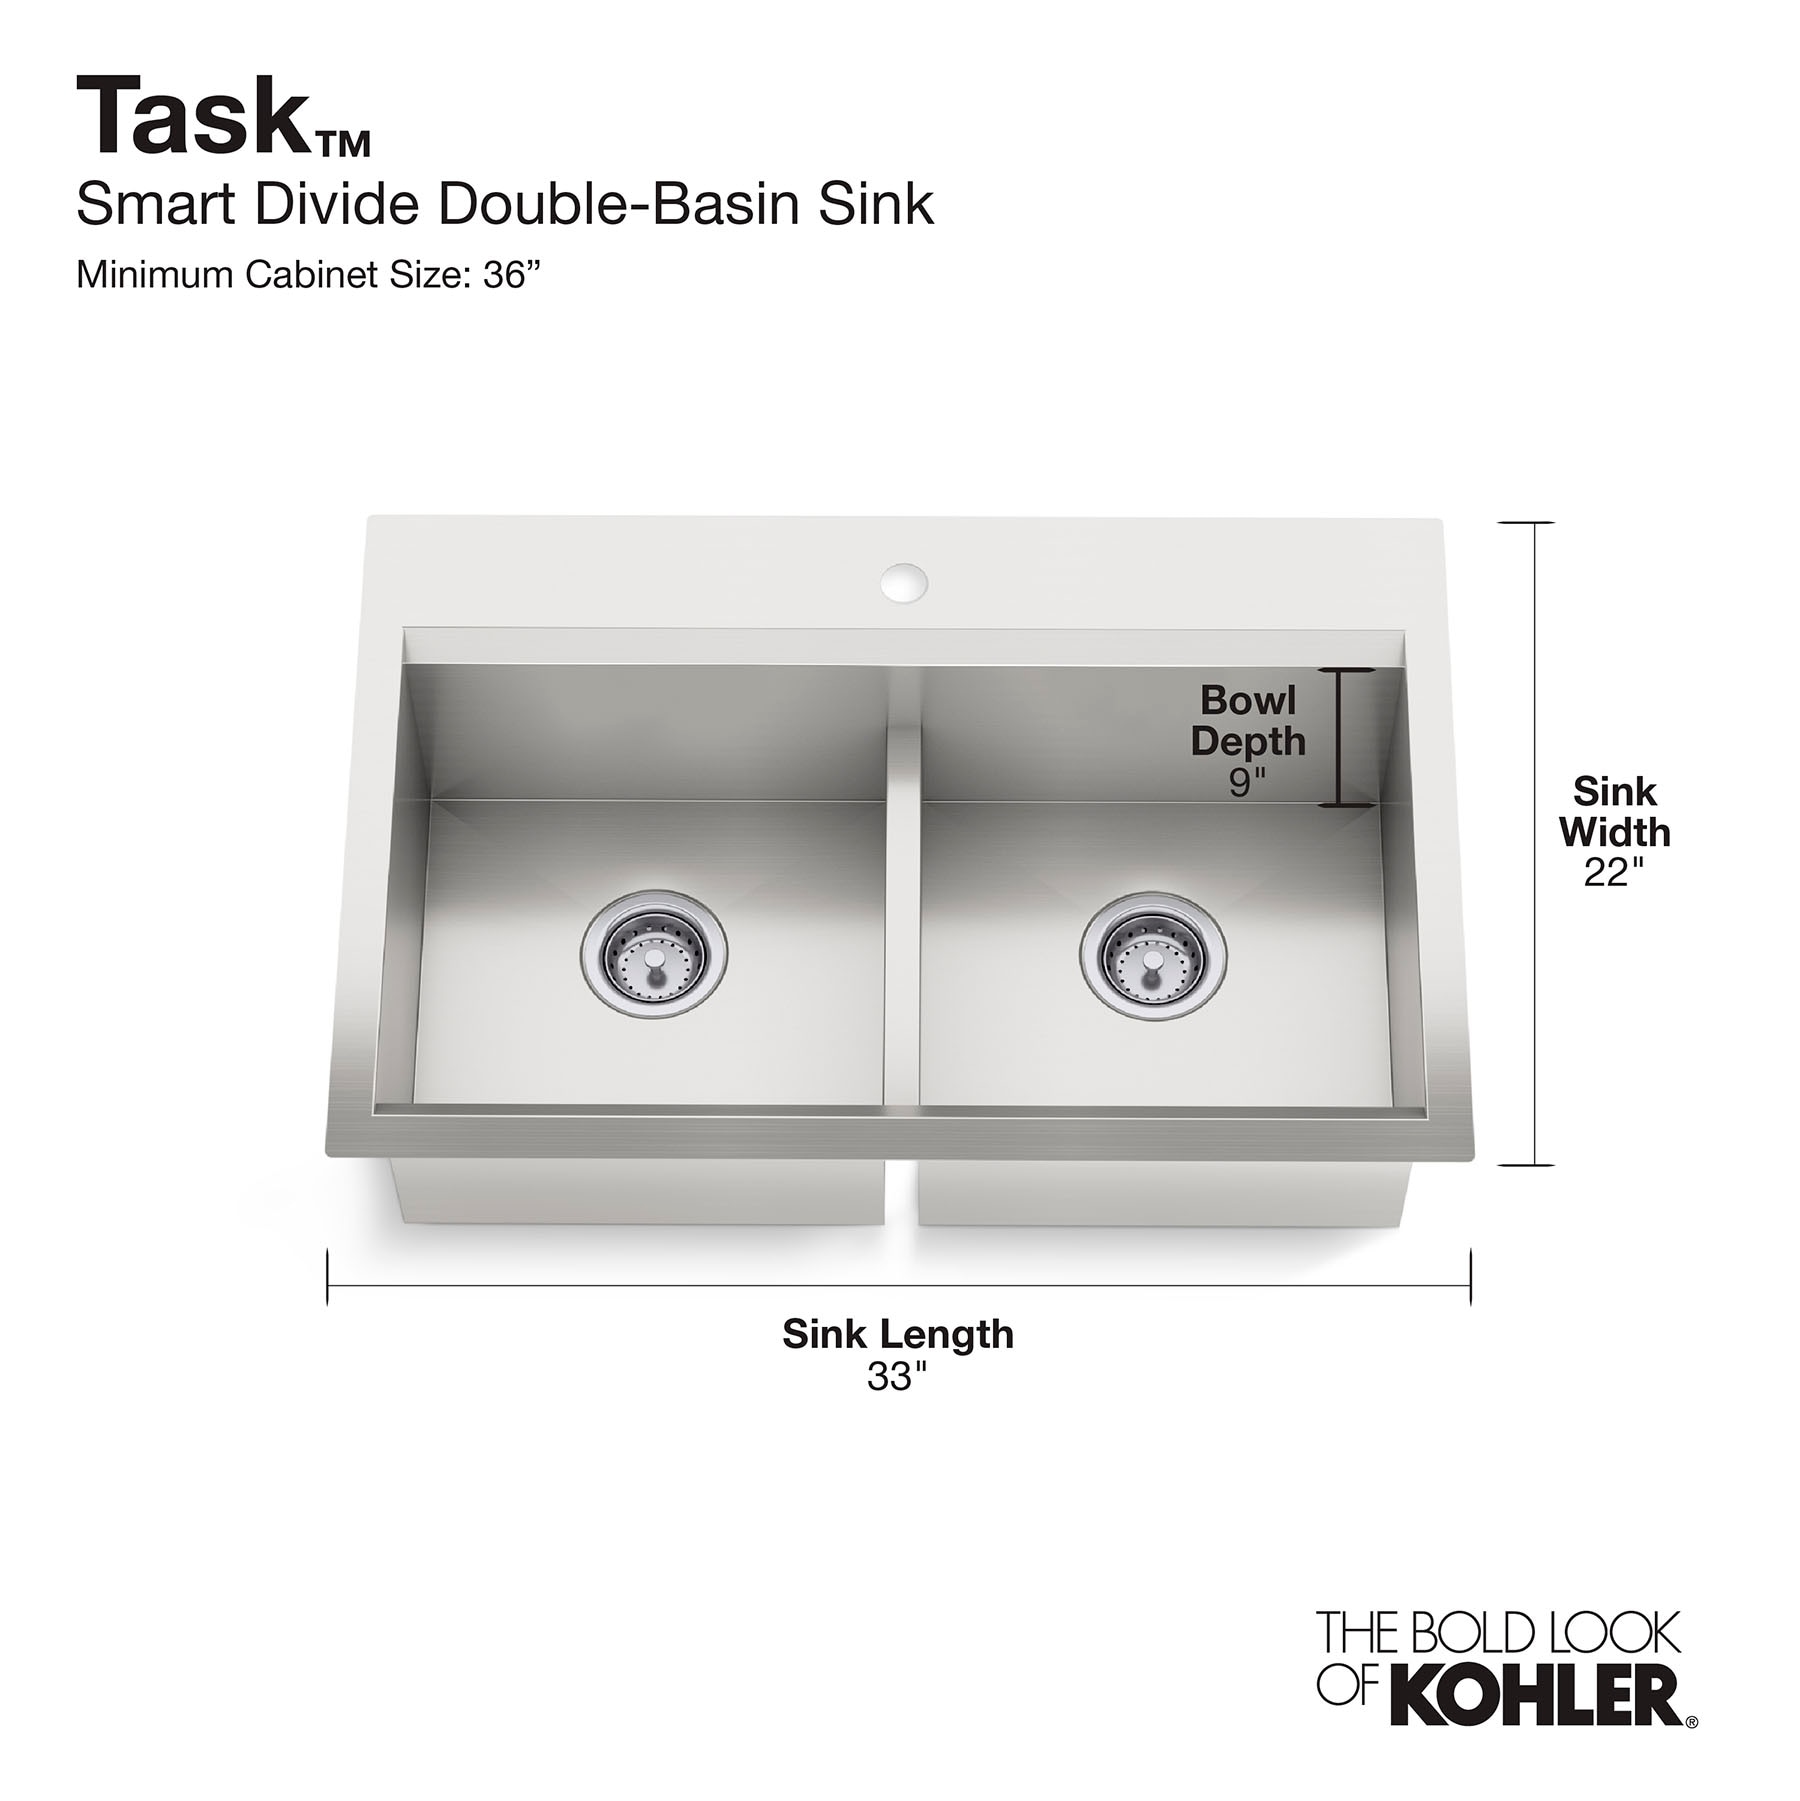 Sink Divider doing its work, simplifying your kitchen sink!! #workofar